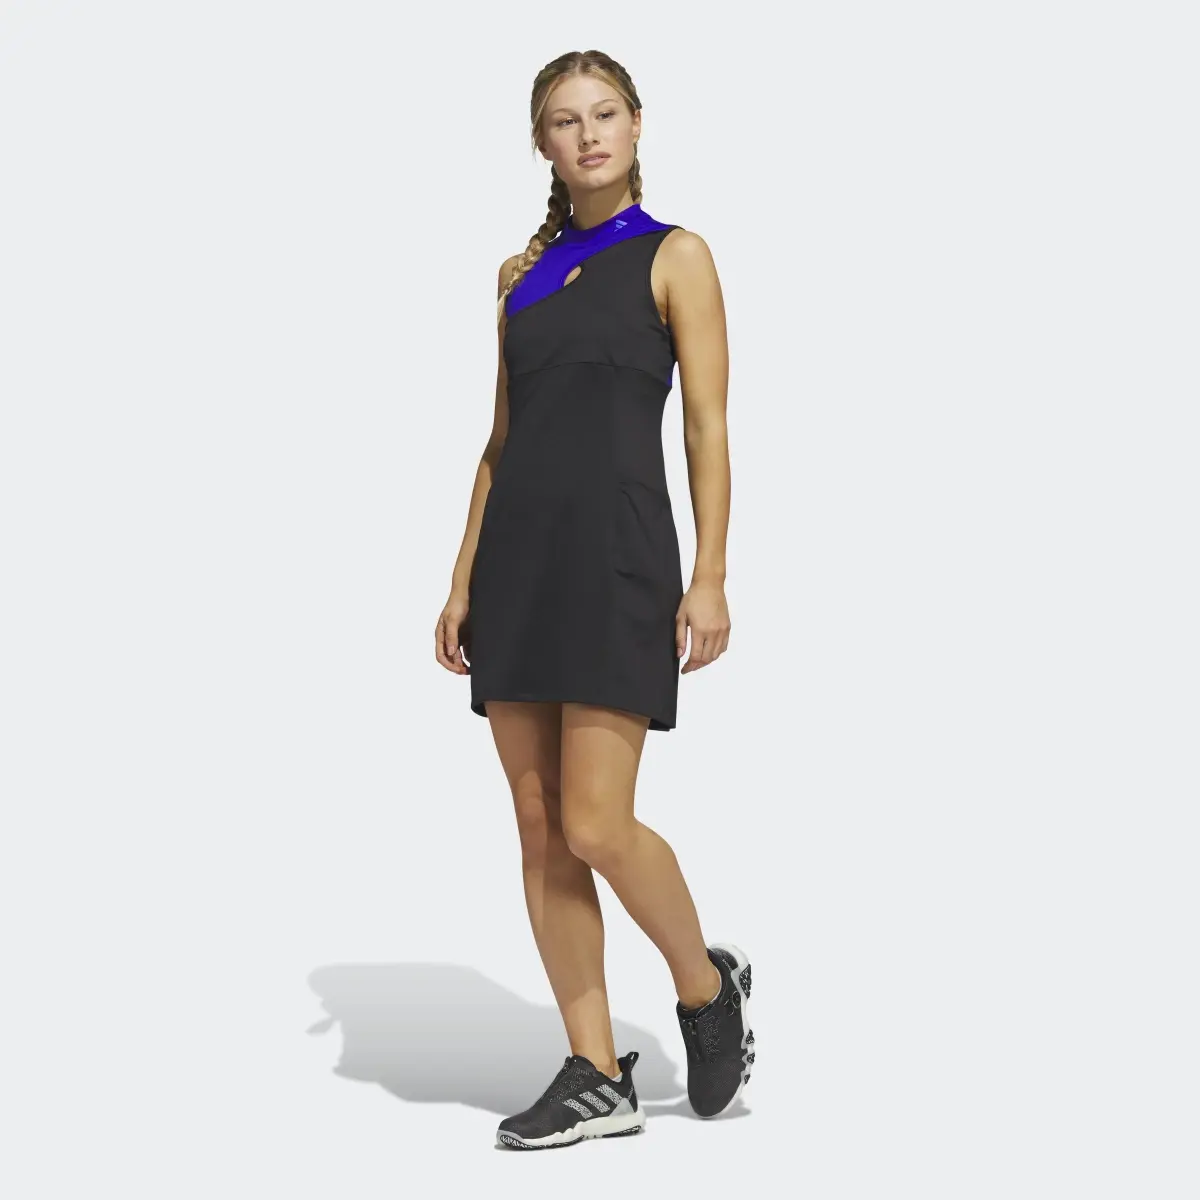 Adidas Ultimate365 Tour Colorblocked Golf Dress. 2